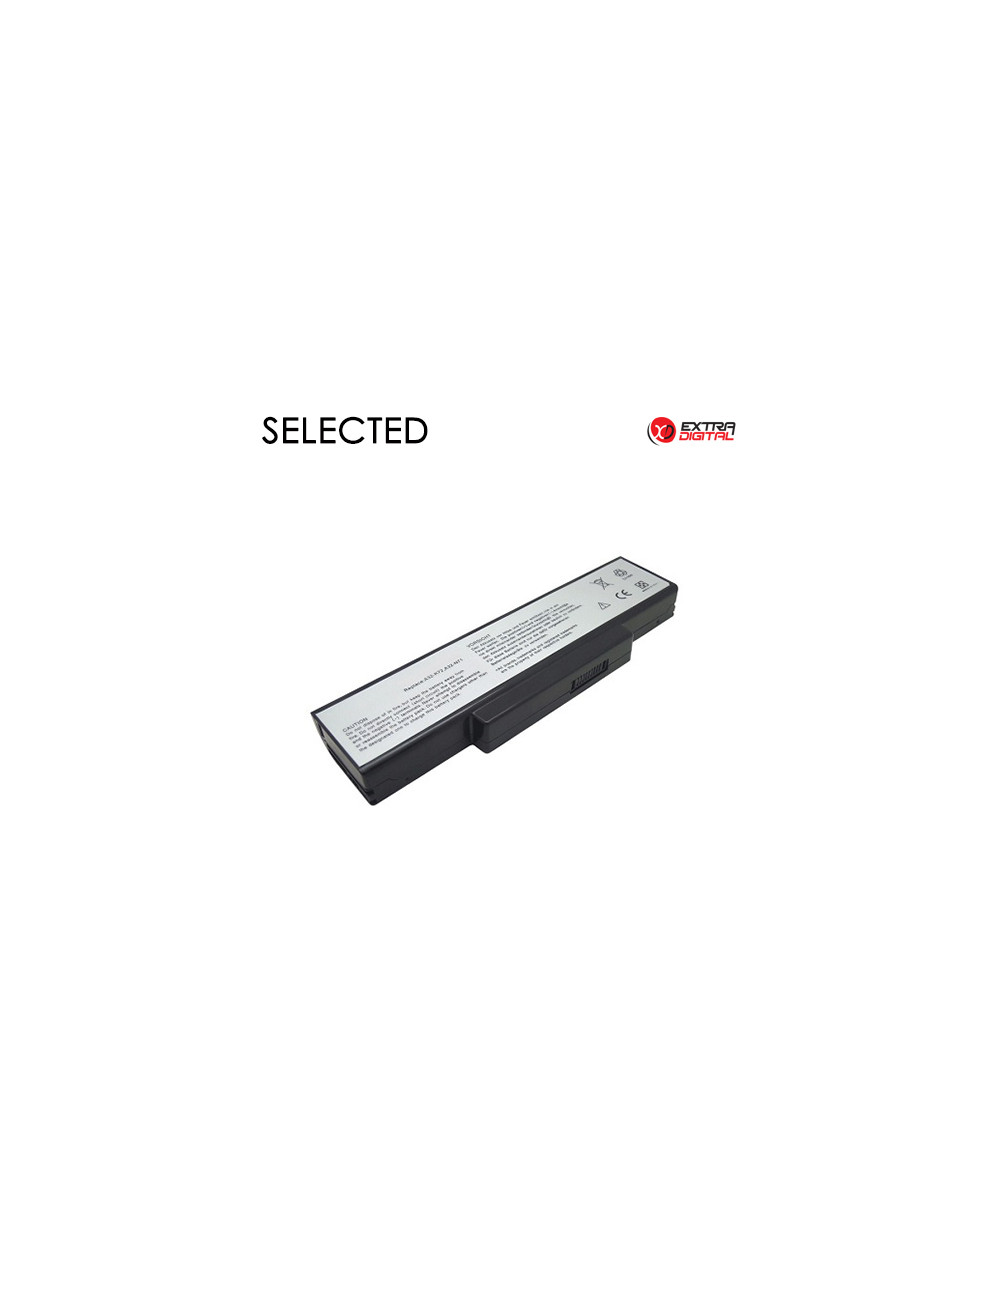 Notebook Battery ASUS A32-K72, 4400mAh, Extra Digital Selected